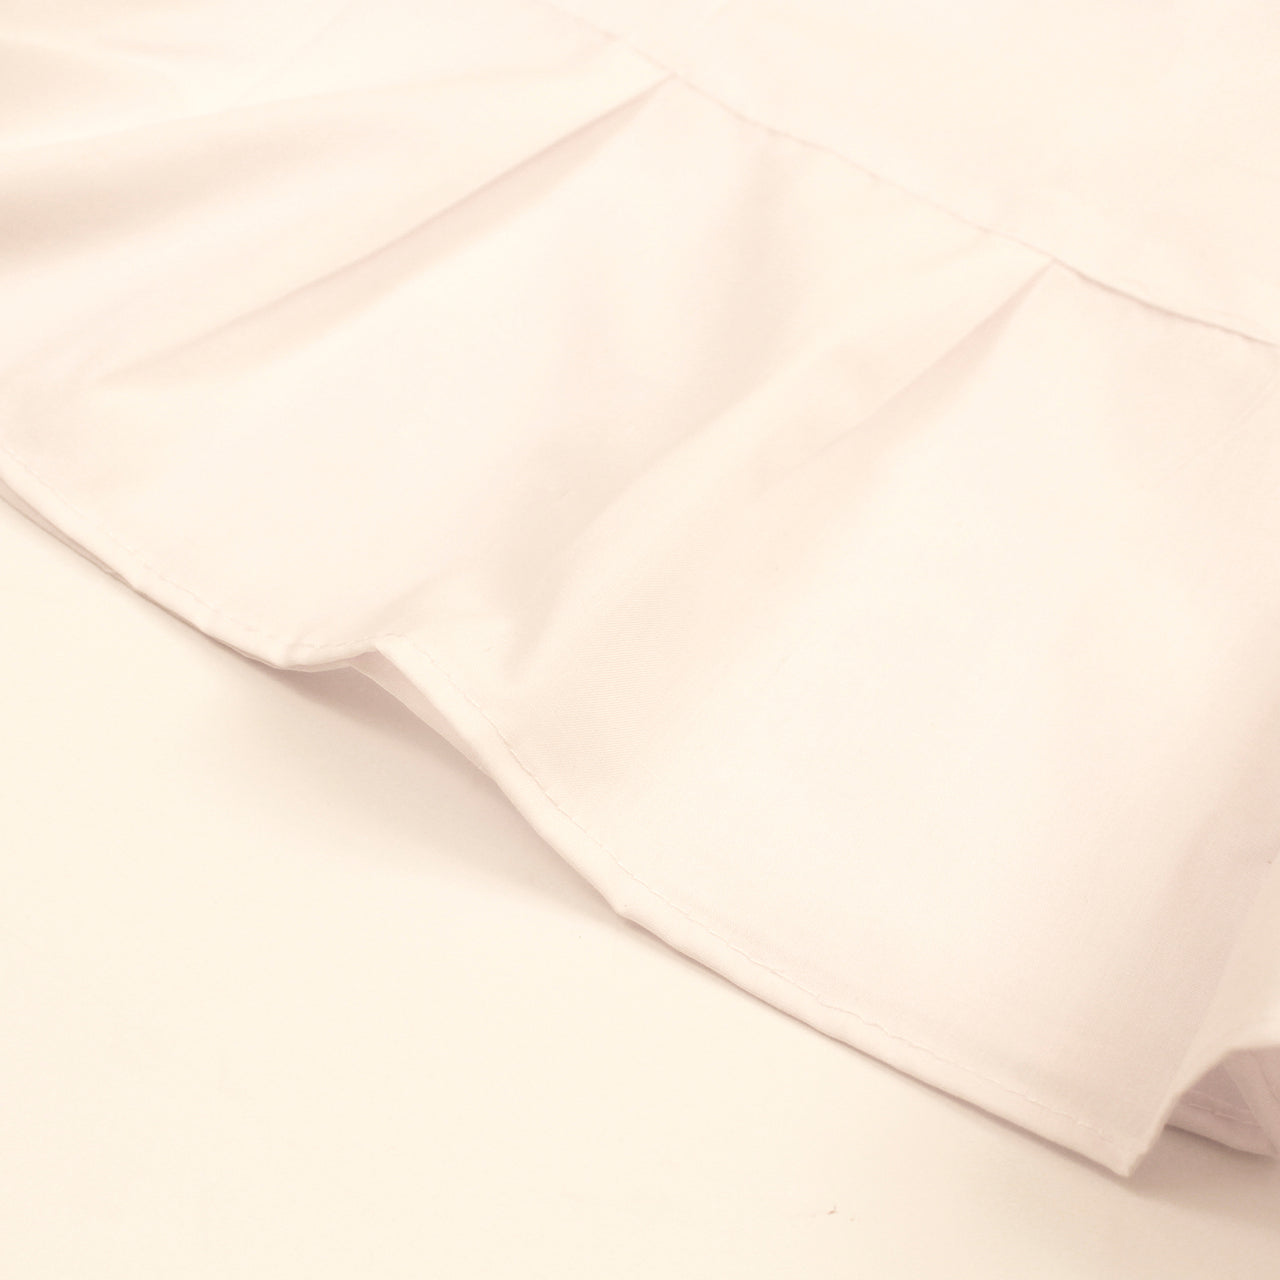 White - Sari (Saree) Petticoat - Available in S, M, L & XL - Underskirts For Sari's